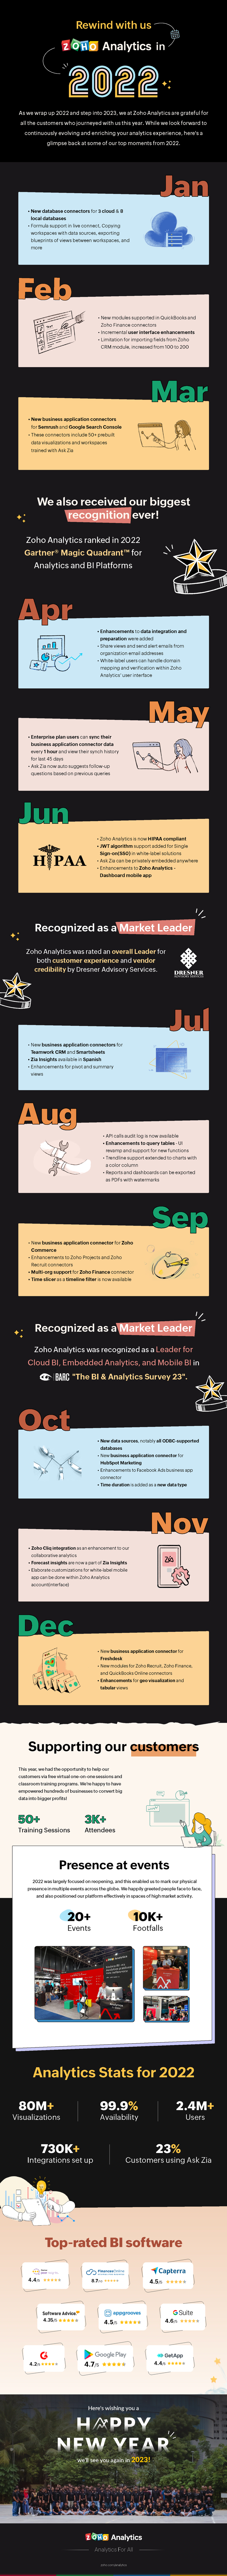 Zoho Analytics in 2022